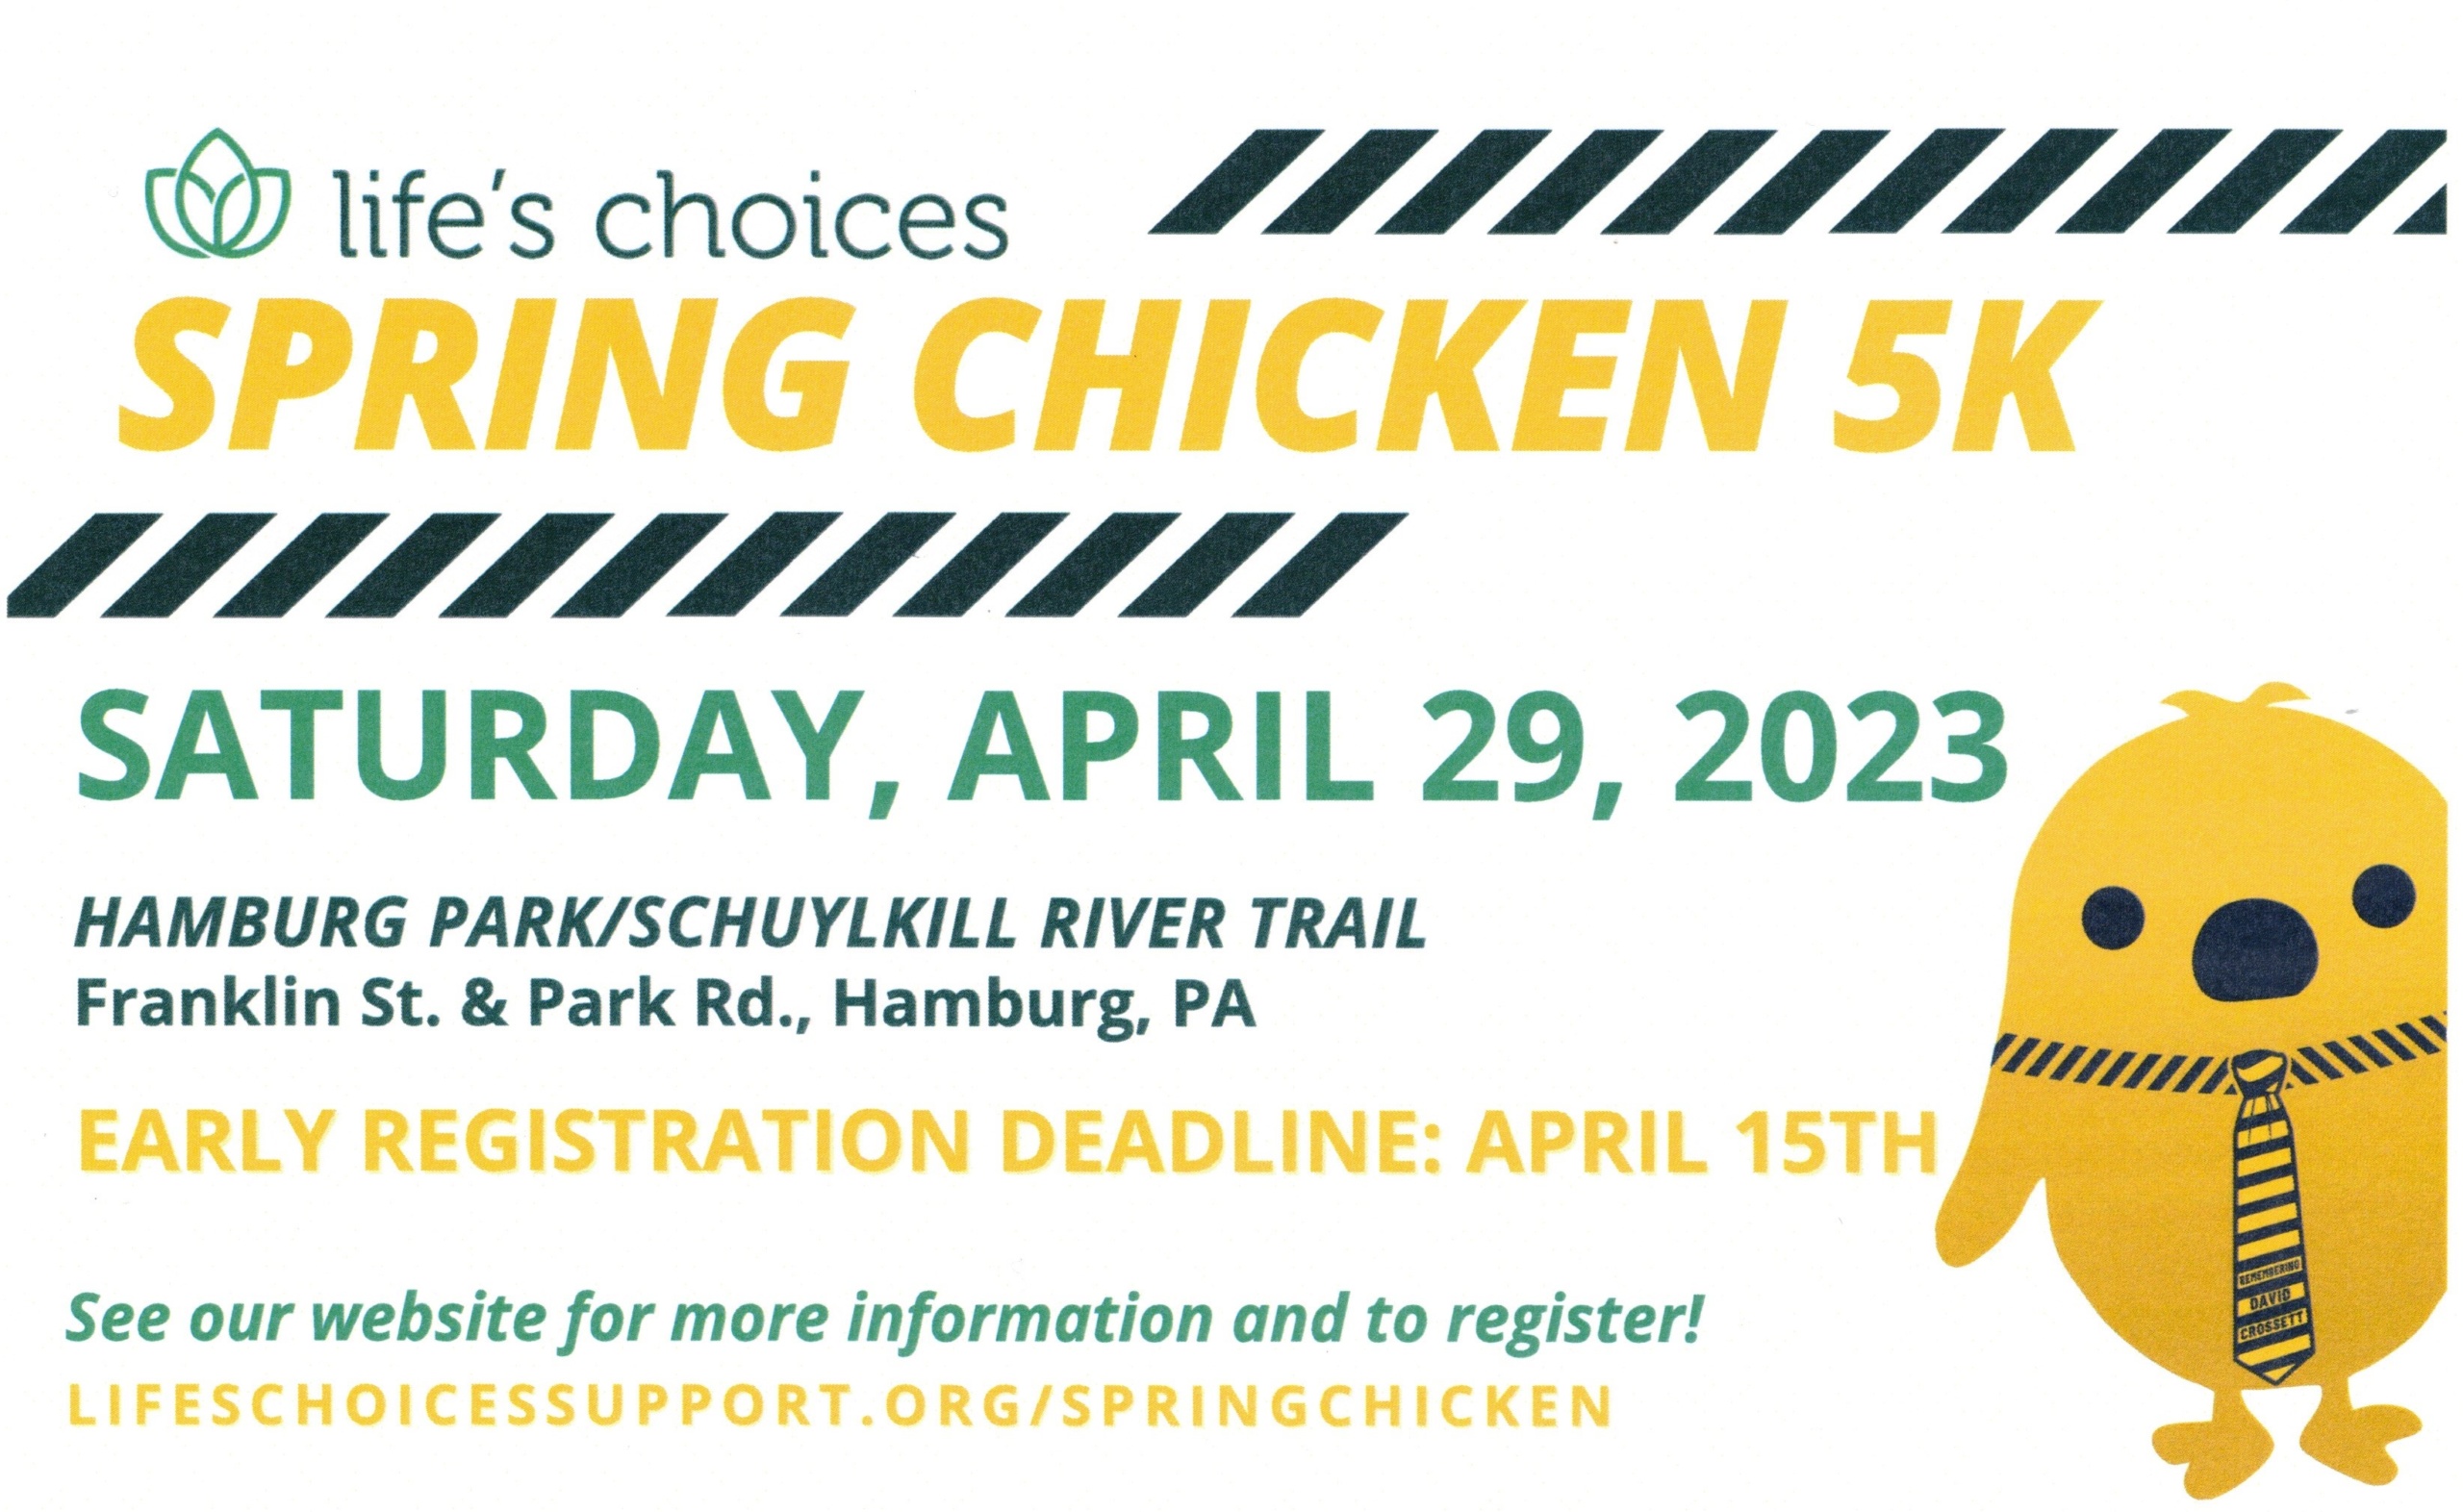 5k lifes choices spring chicken hamburg park 2023